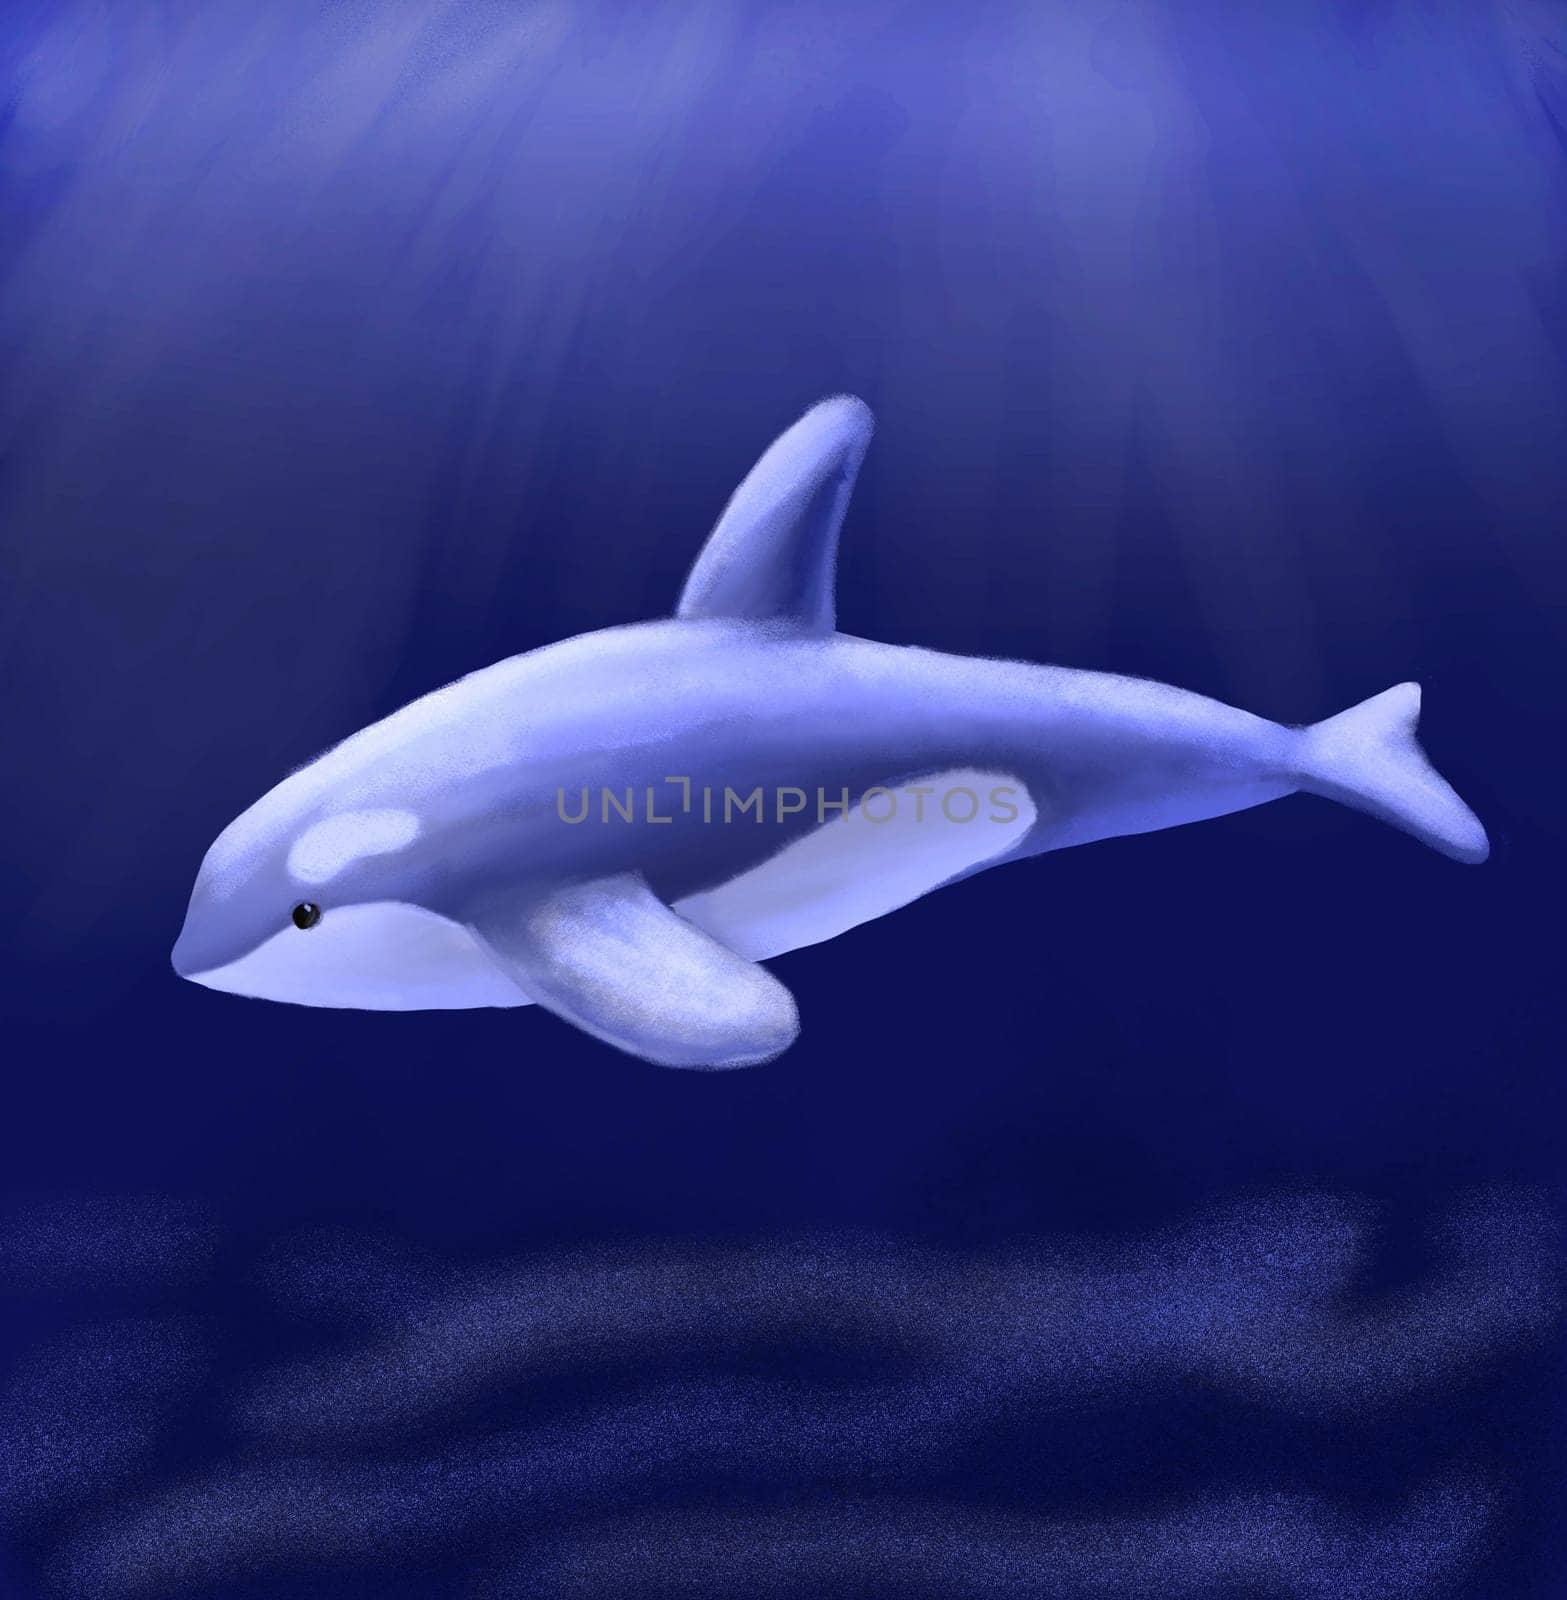 Friendly Killer Whale in sea or ocean. Underwater animal hand drawn painting by ElenaPlatova